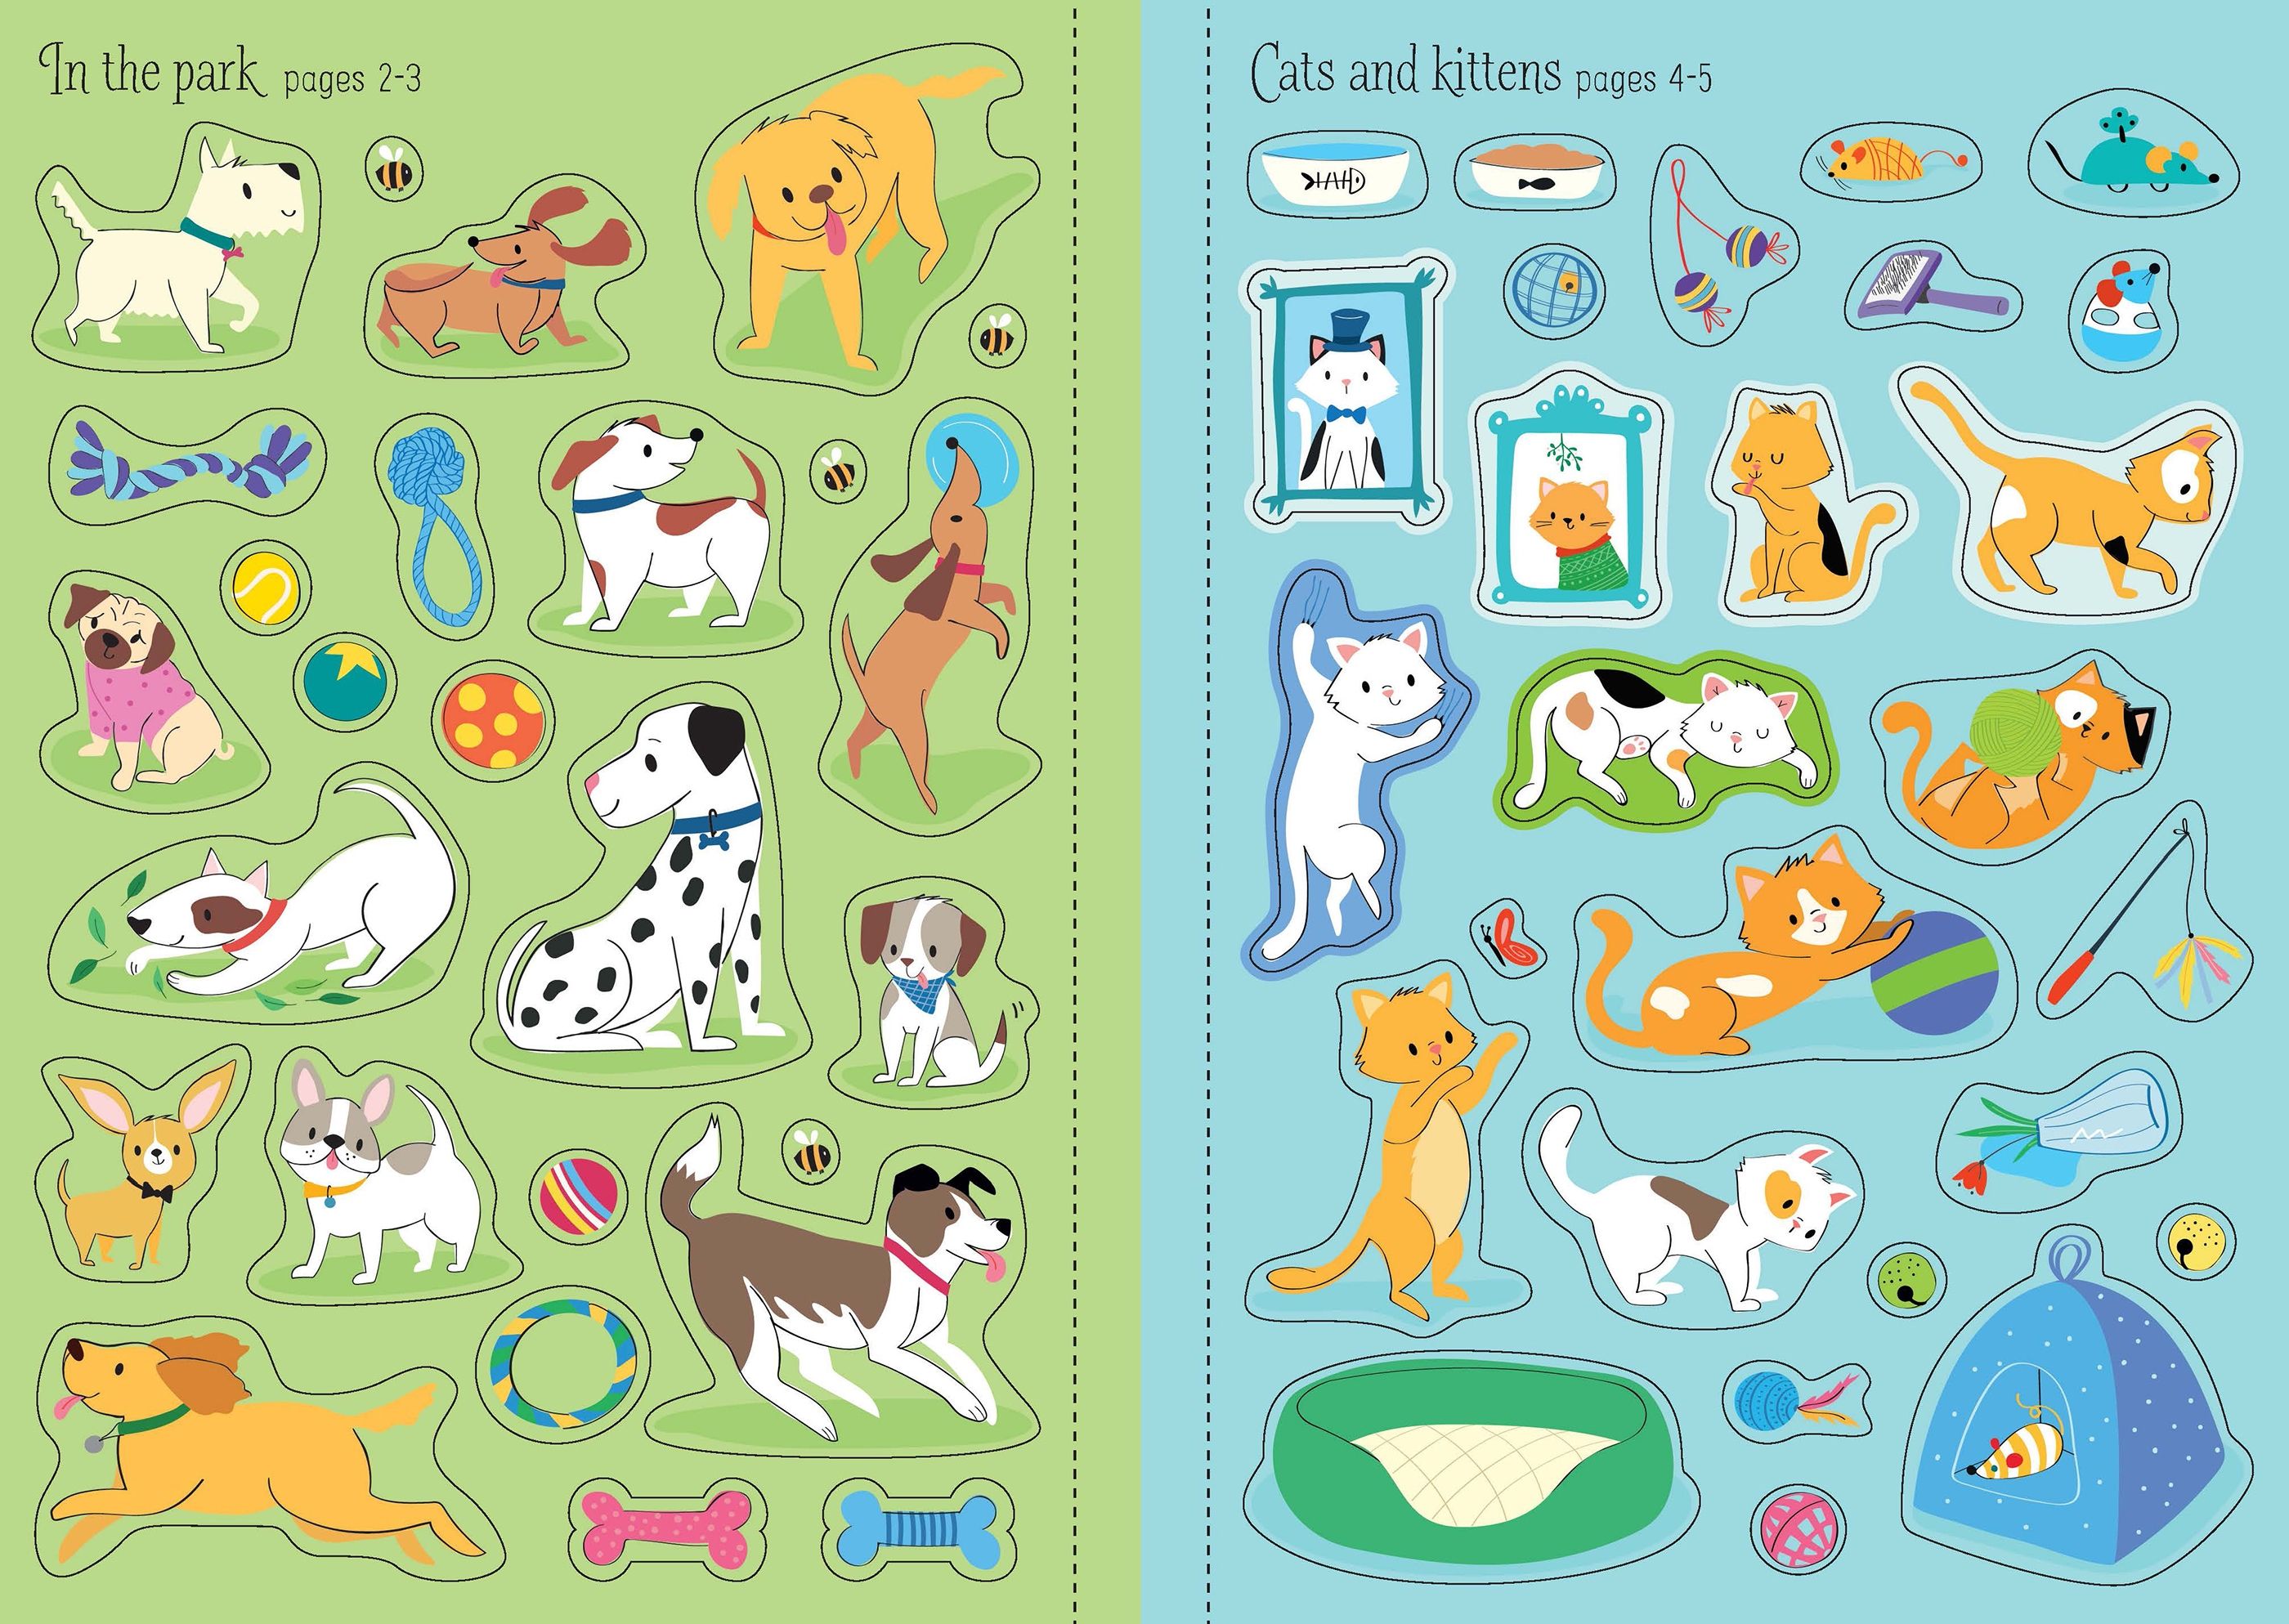 Usborne Books | Little First Stickers - Pets